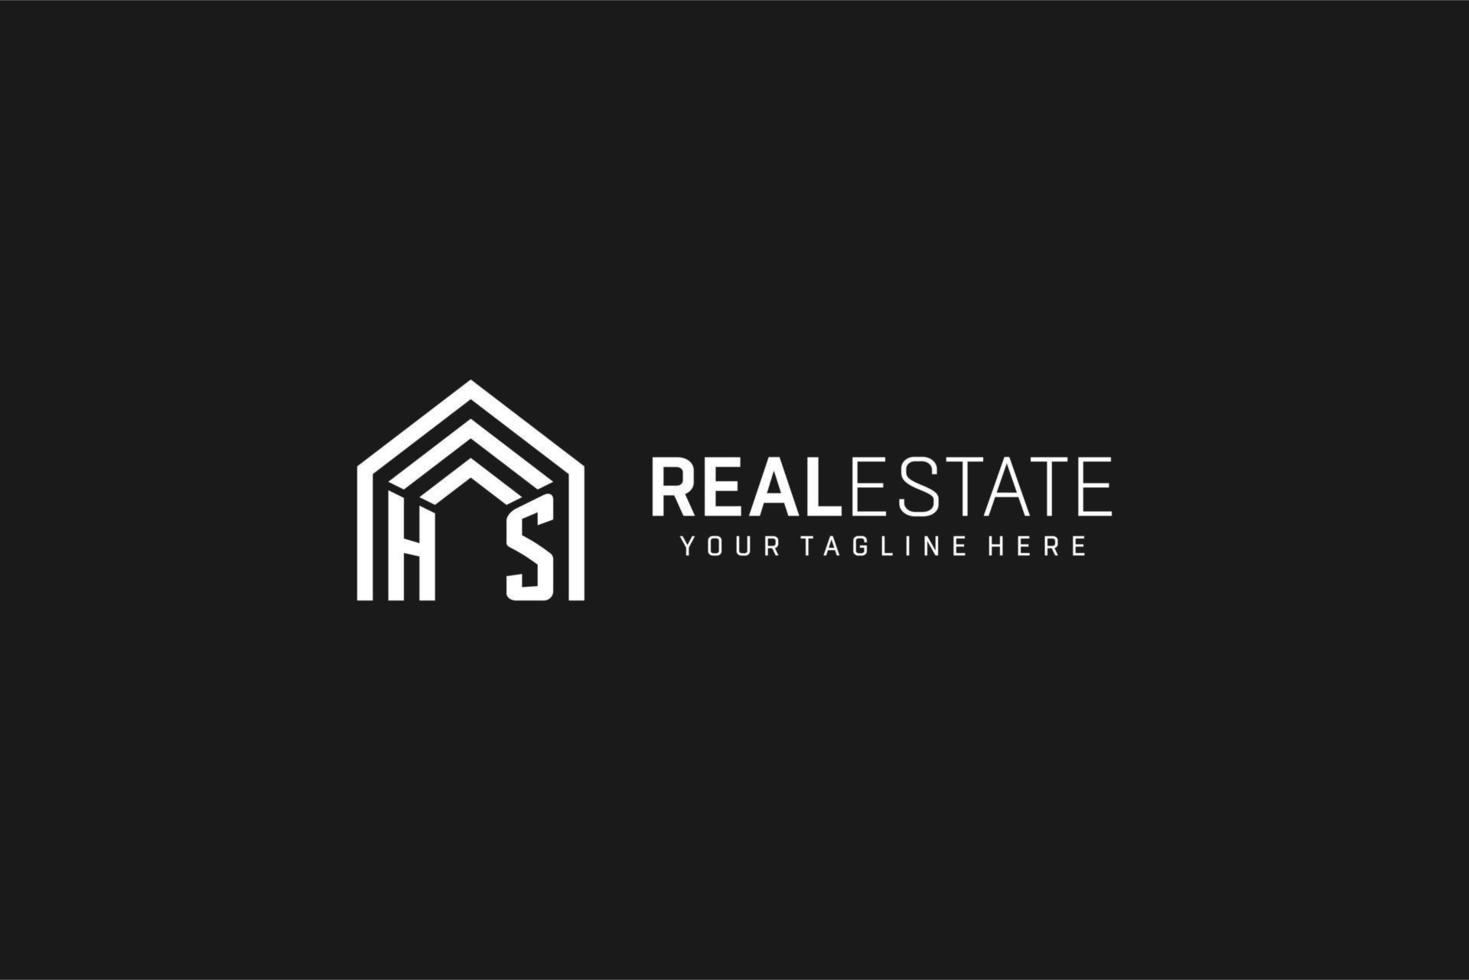 Letter HS house roof shape logo, creative real estate monogram logo style vector